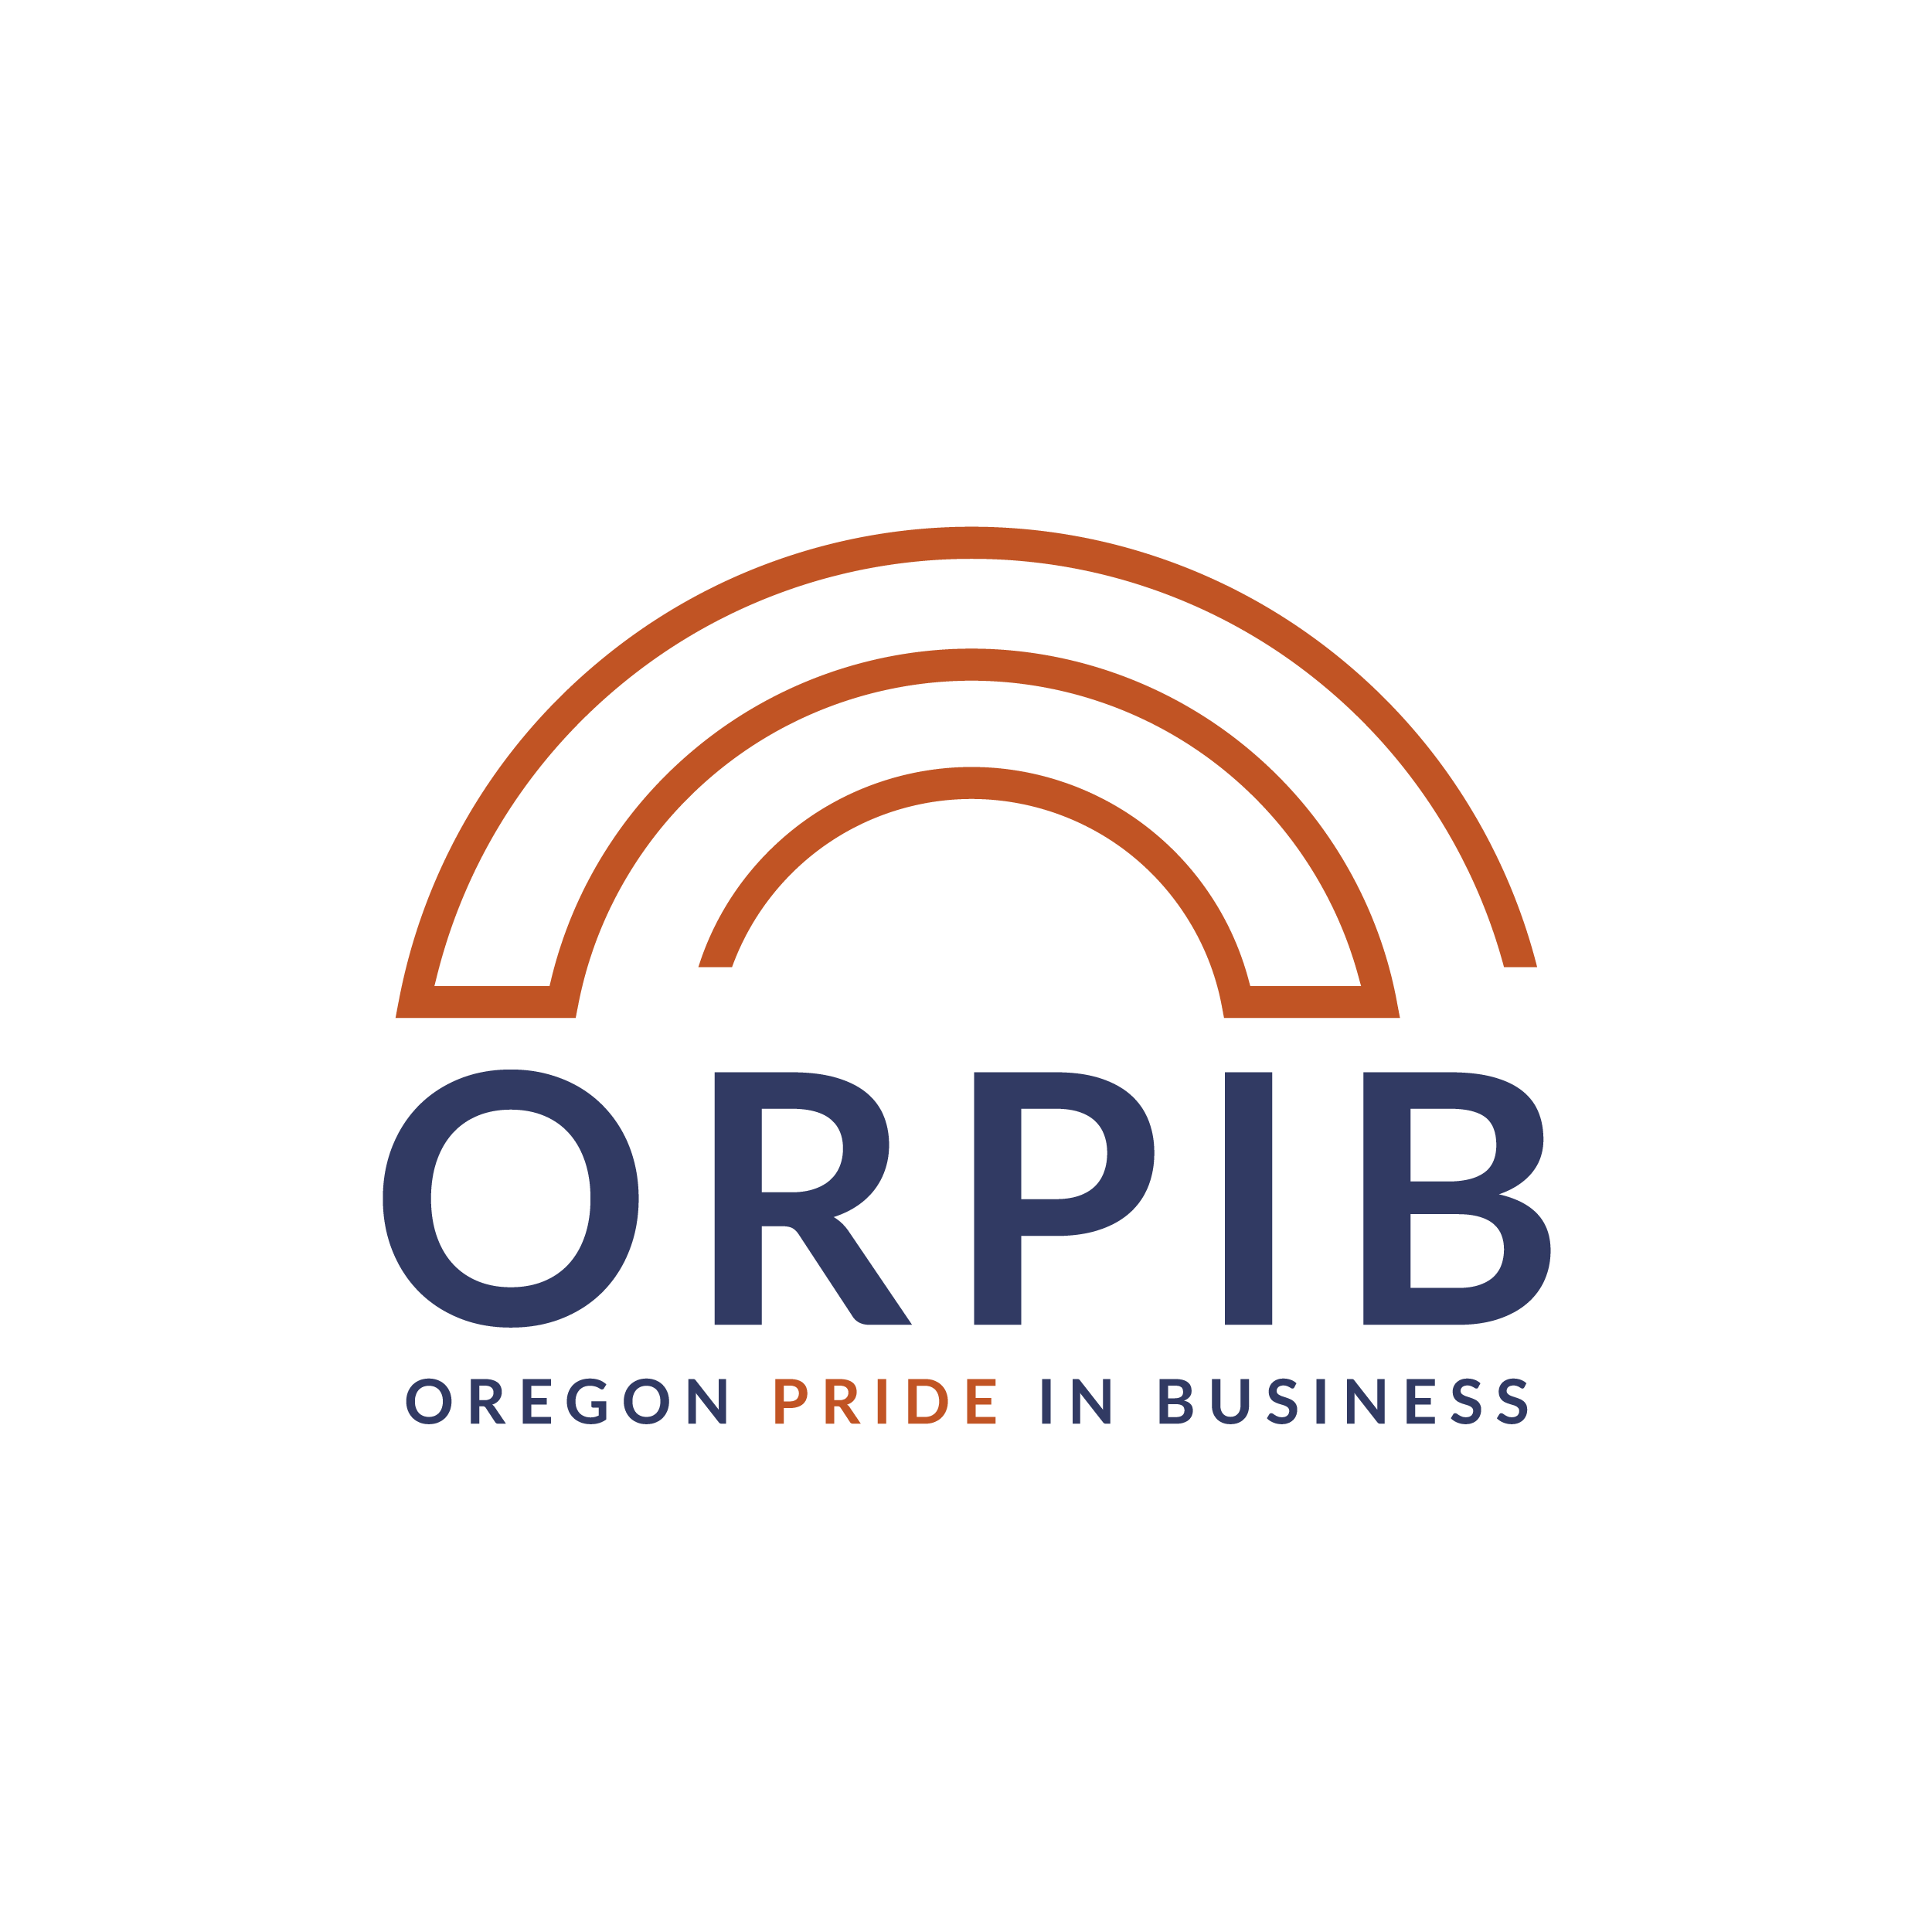 Oregon Pride in Business Executive Director